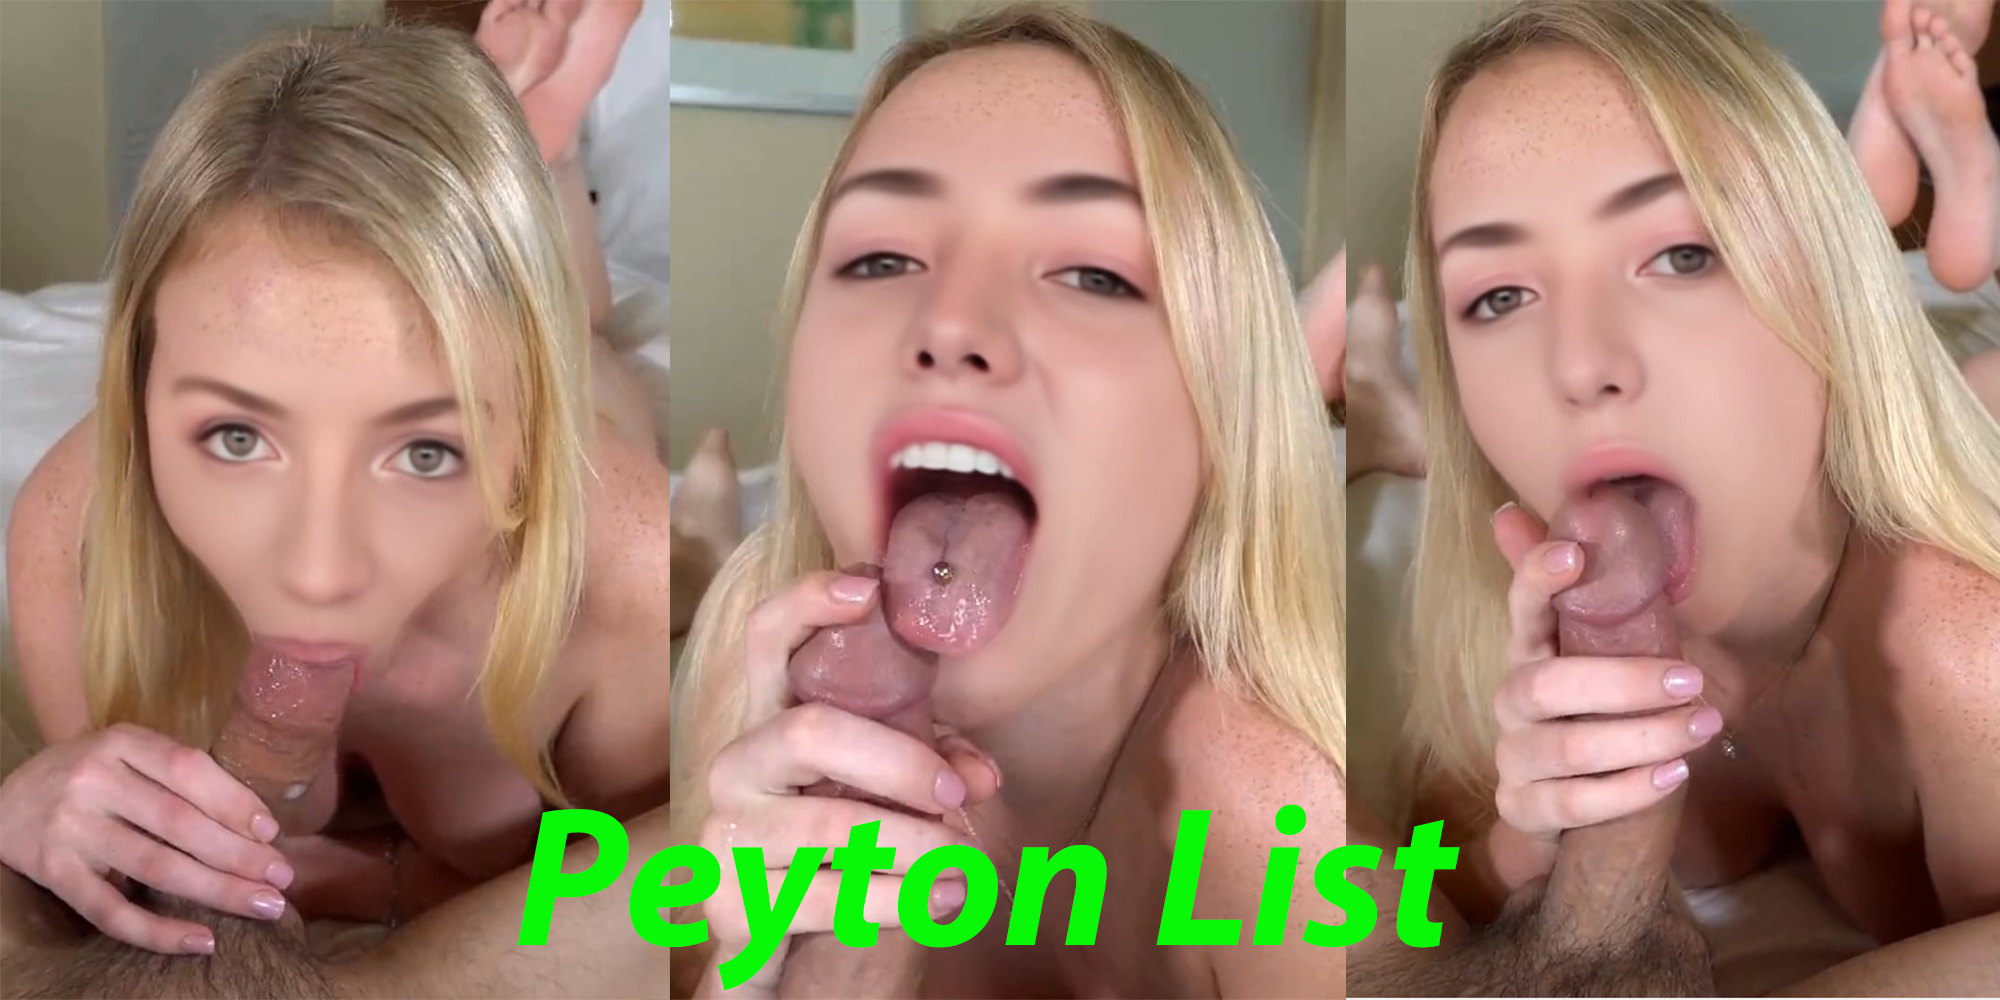 Peyton List professional blowjob (full version)